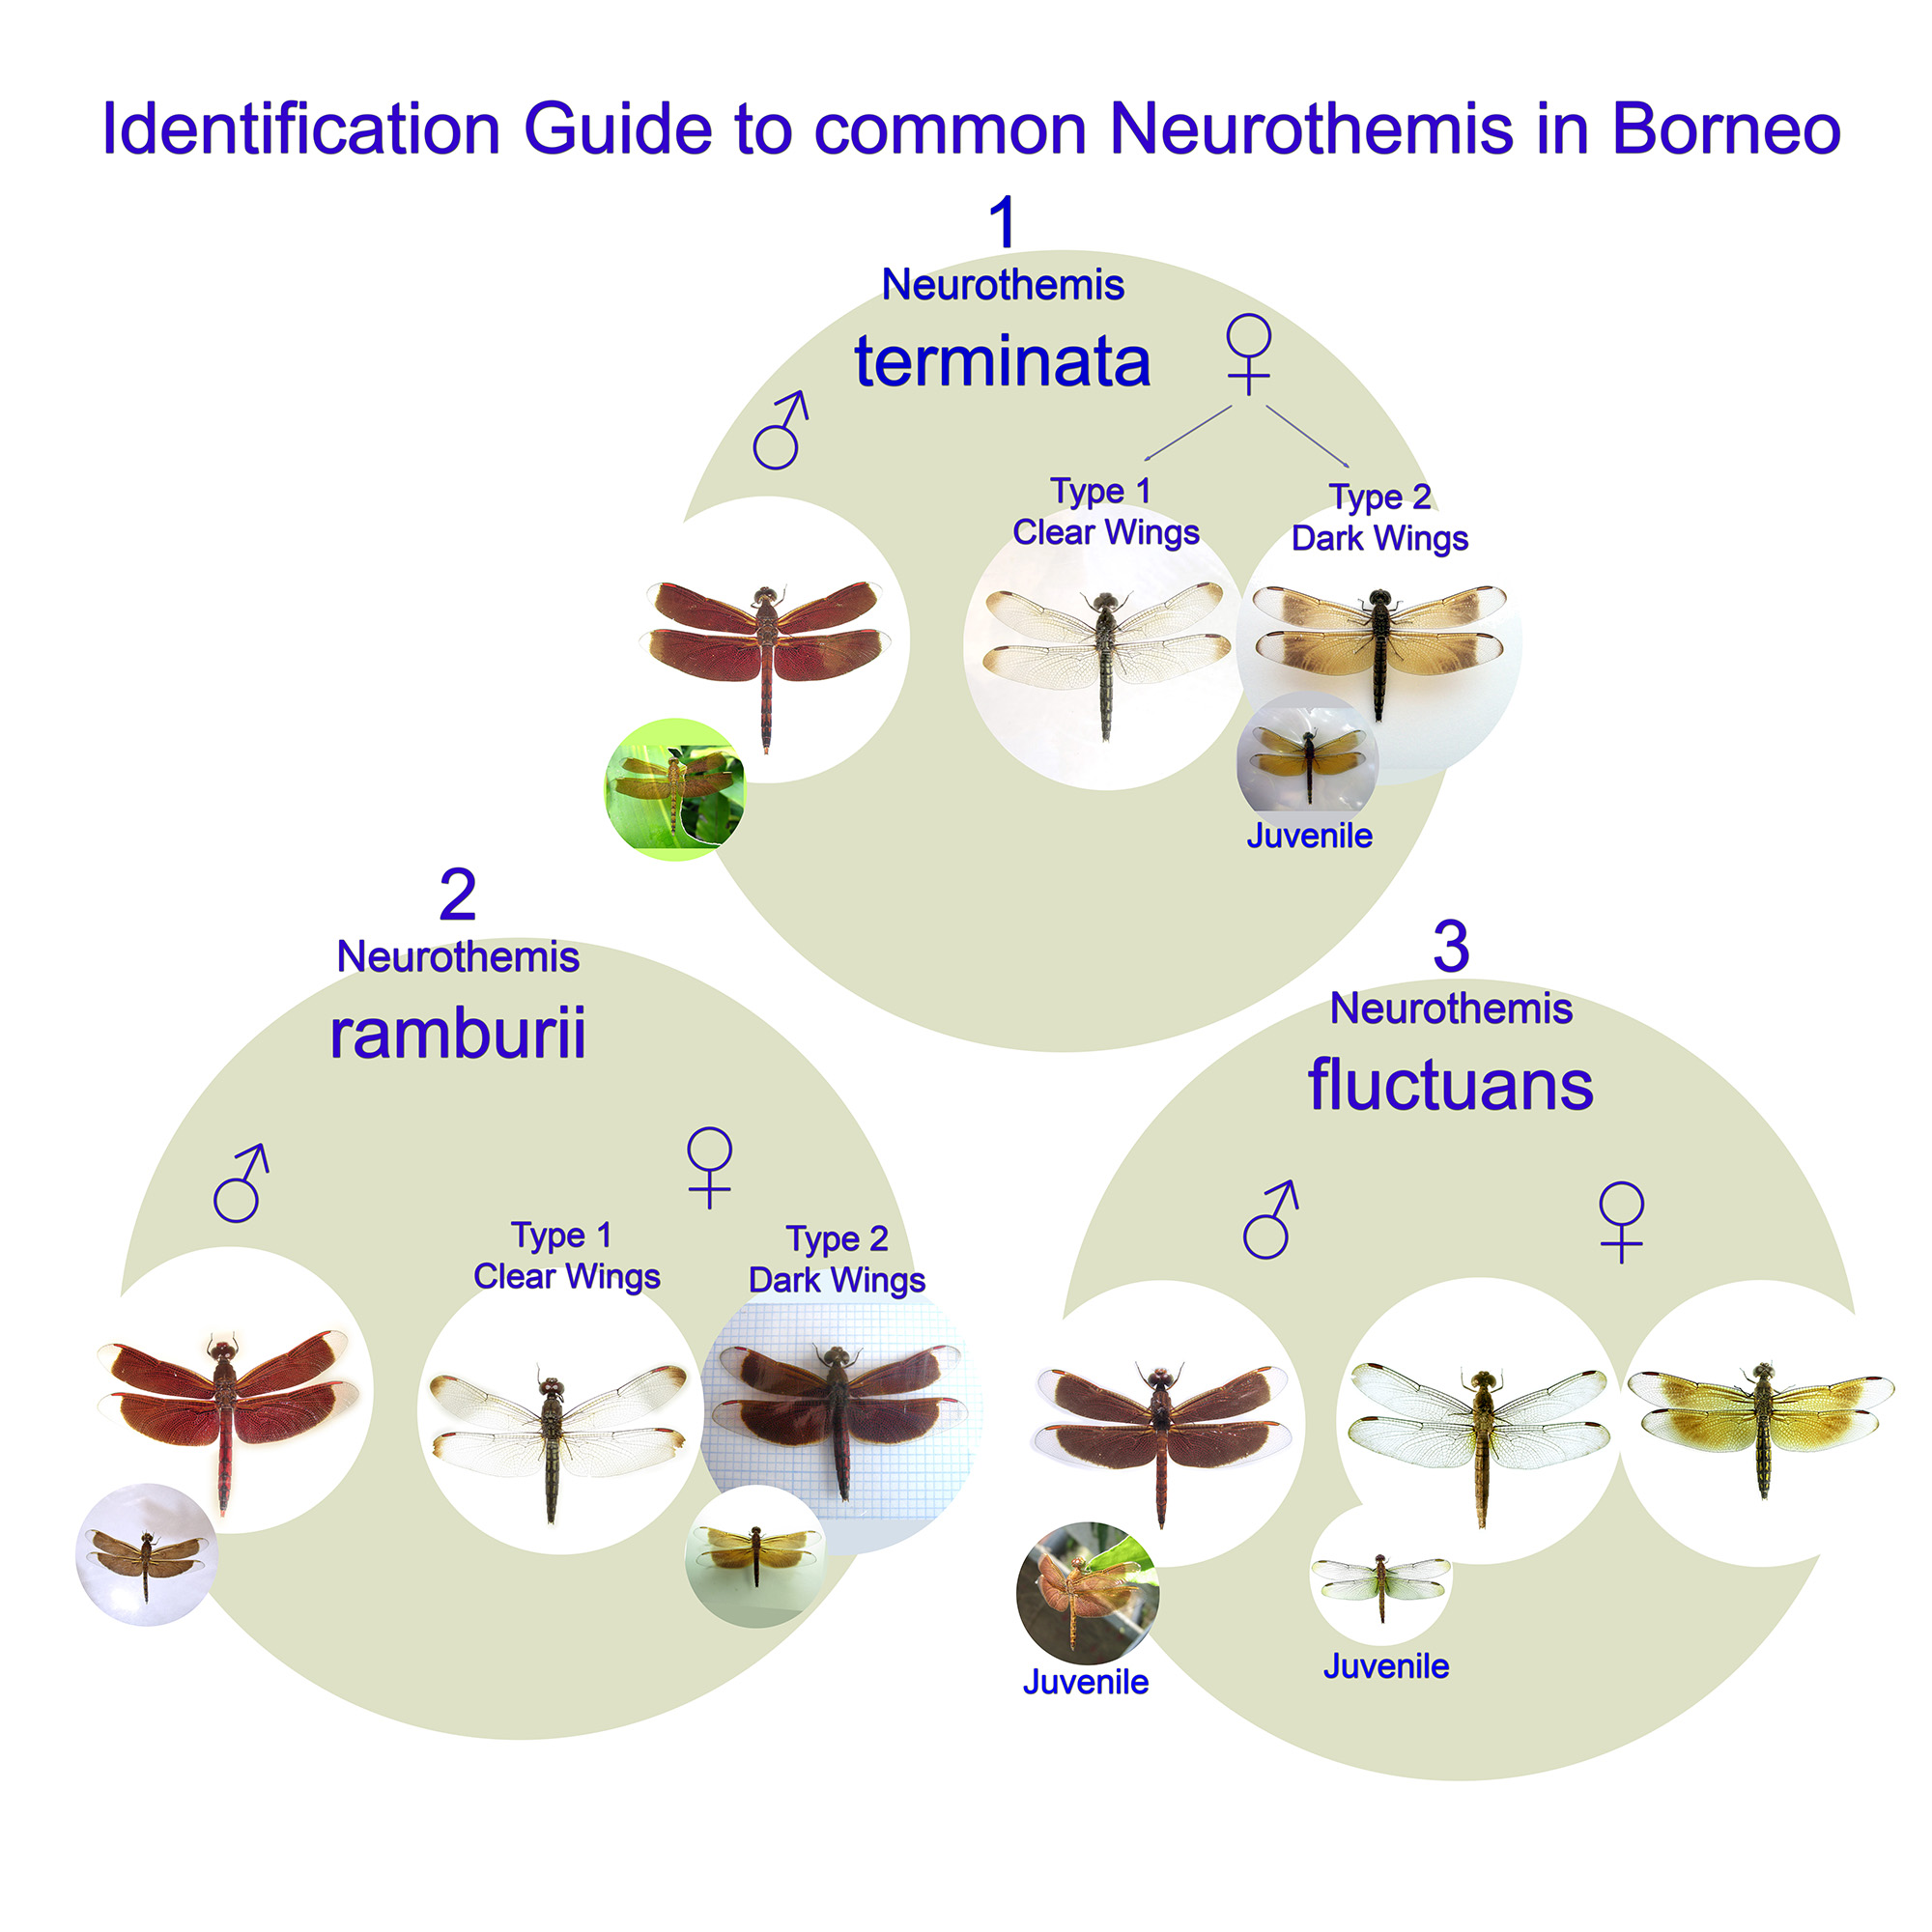 Identification guide to the three common Neurothemis of Borneo